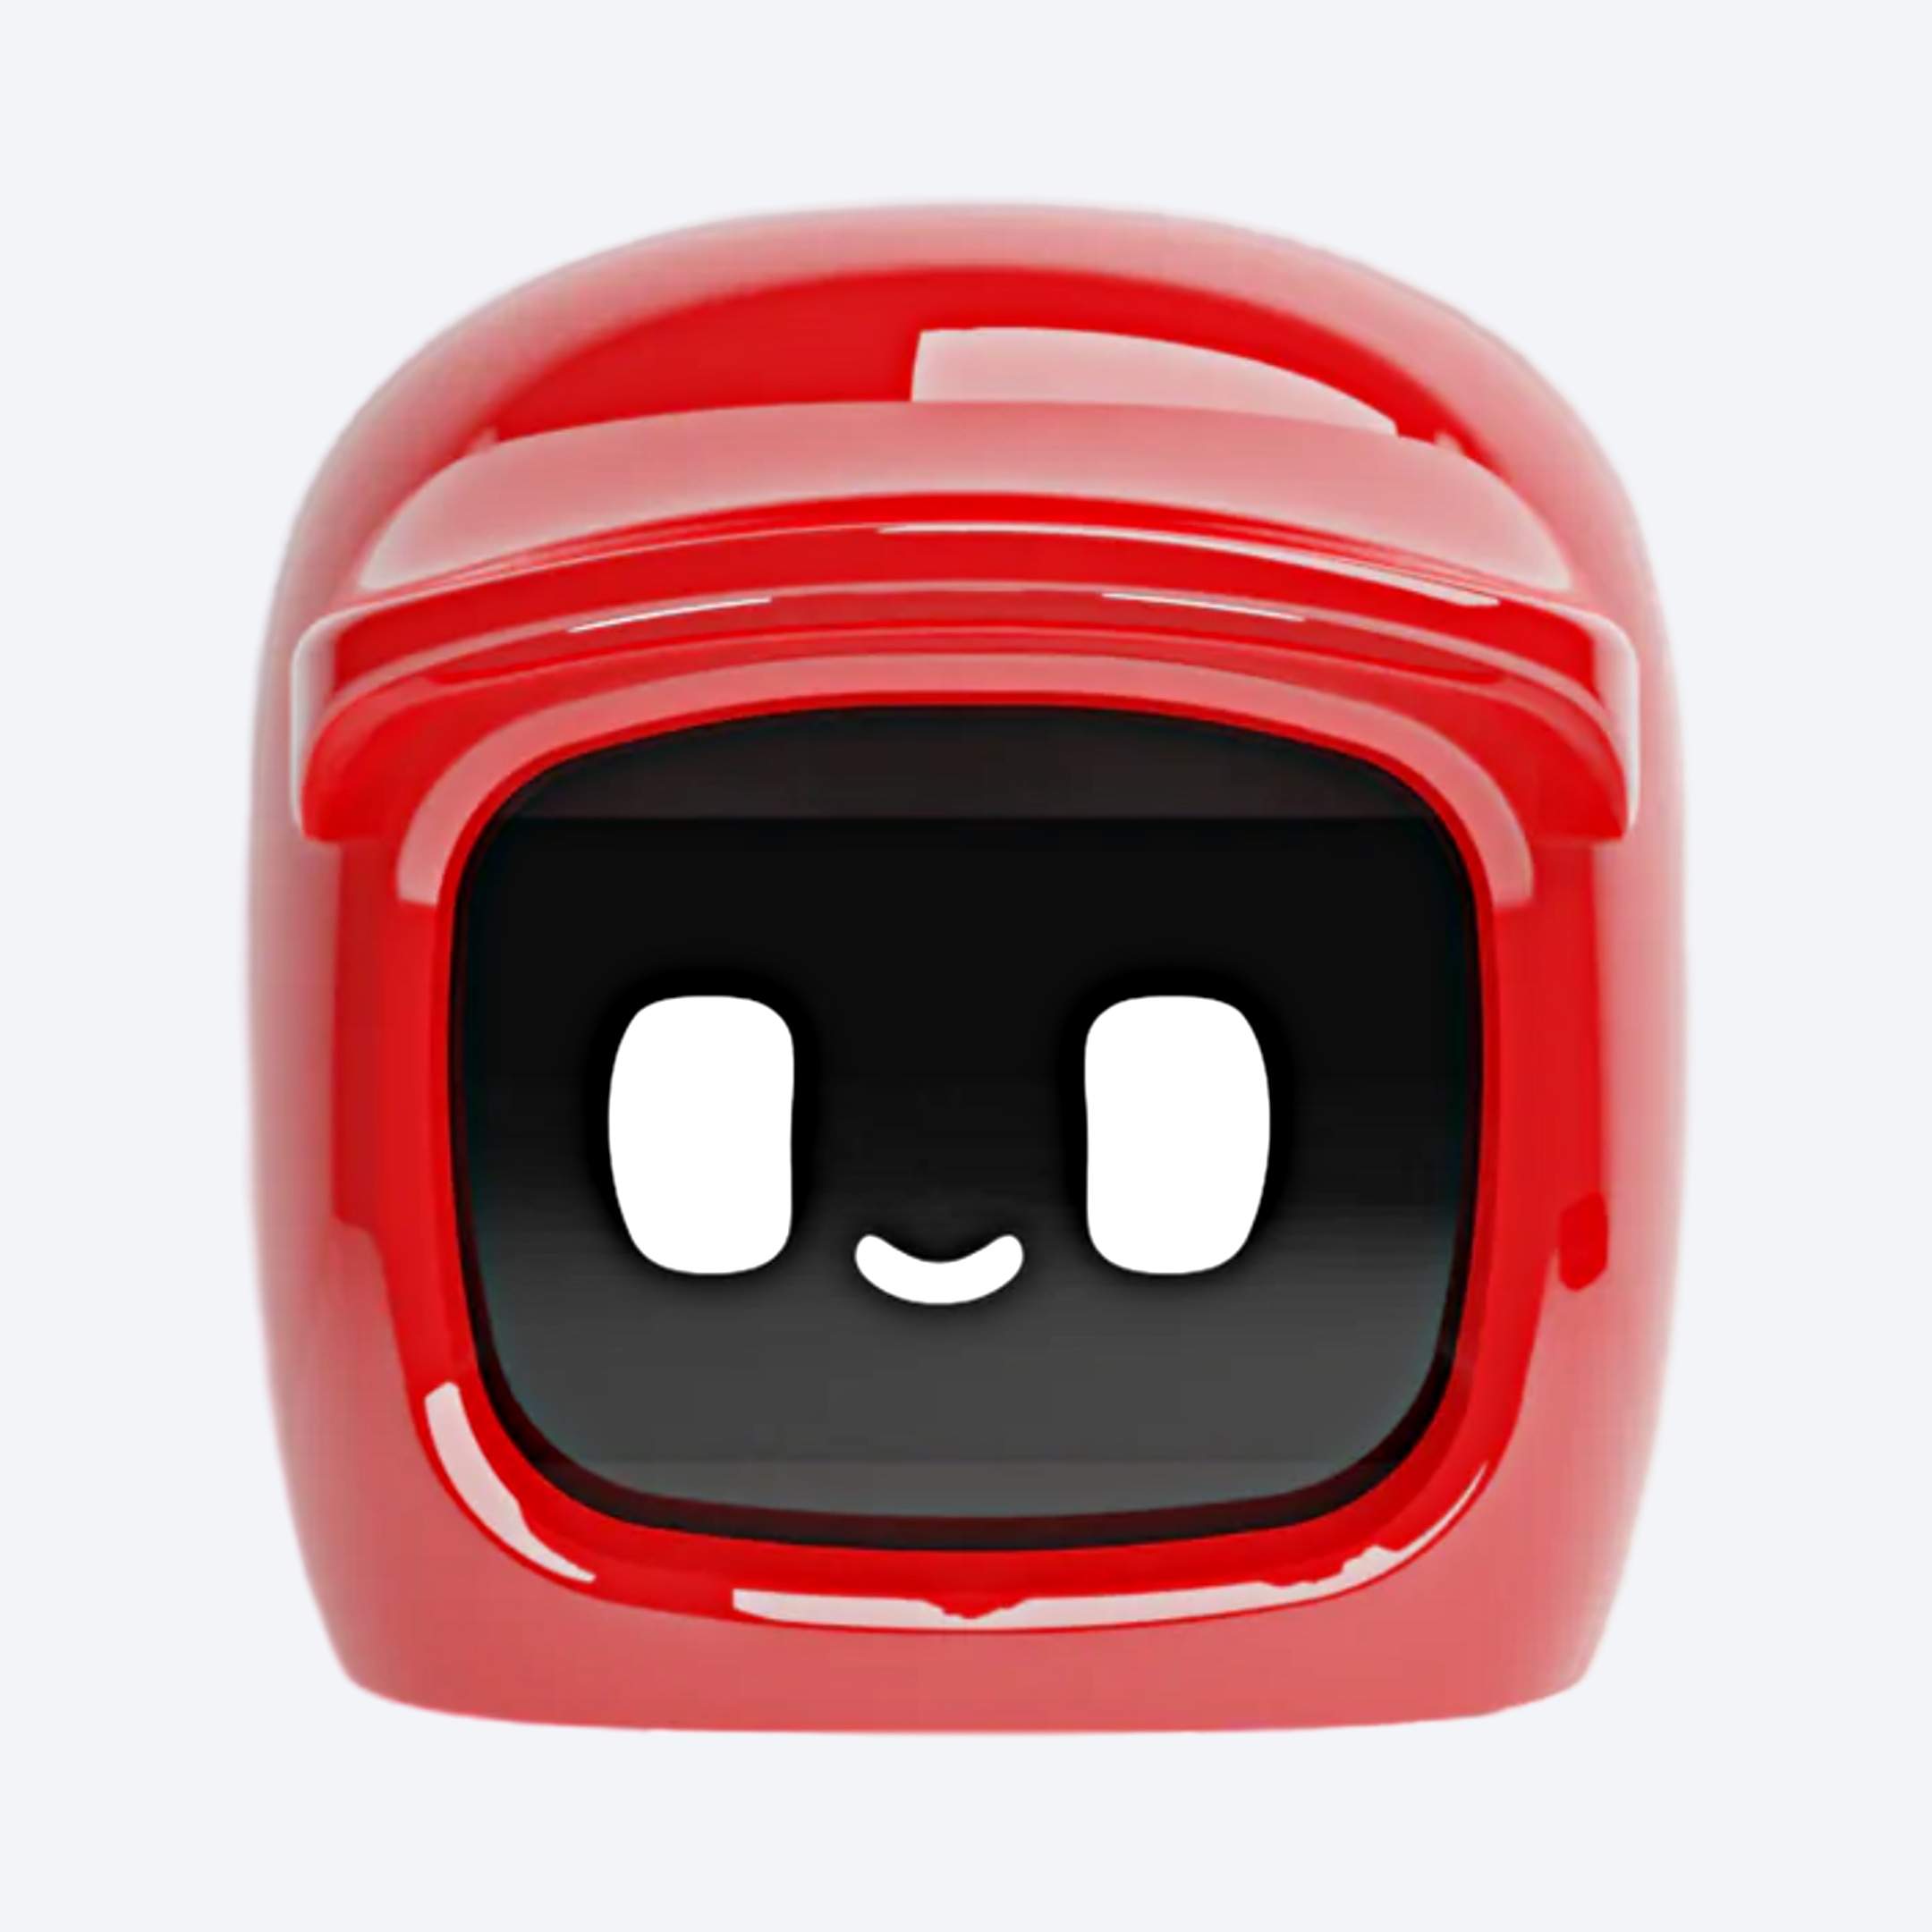 Dasai mochi 2.0 red helmet